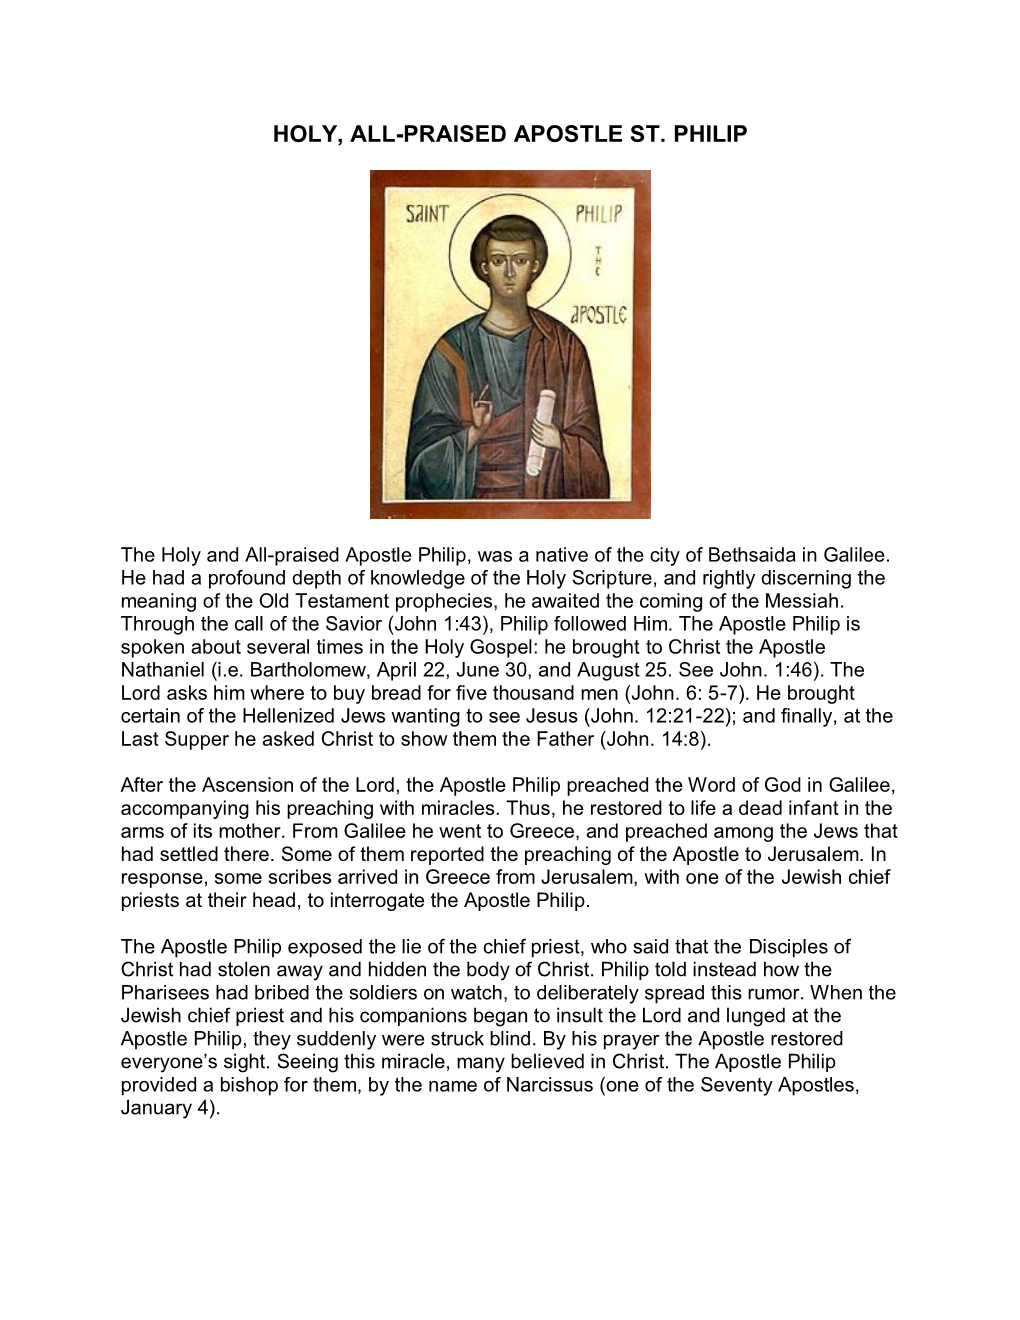 Holy, All-Praised Apostle St. Philip